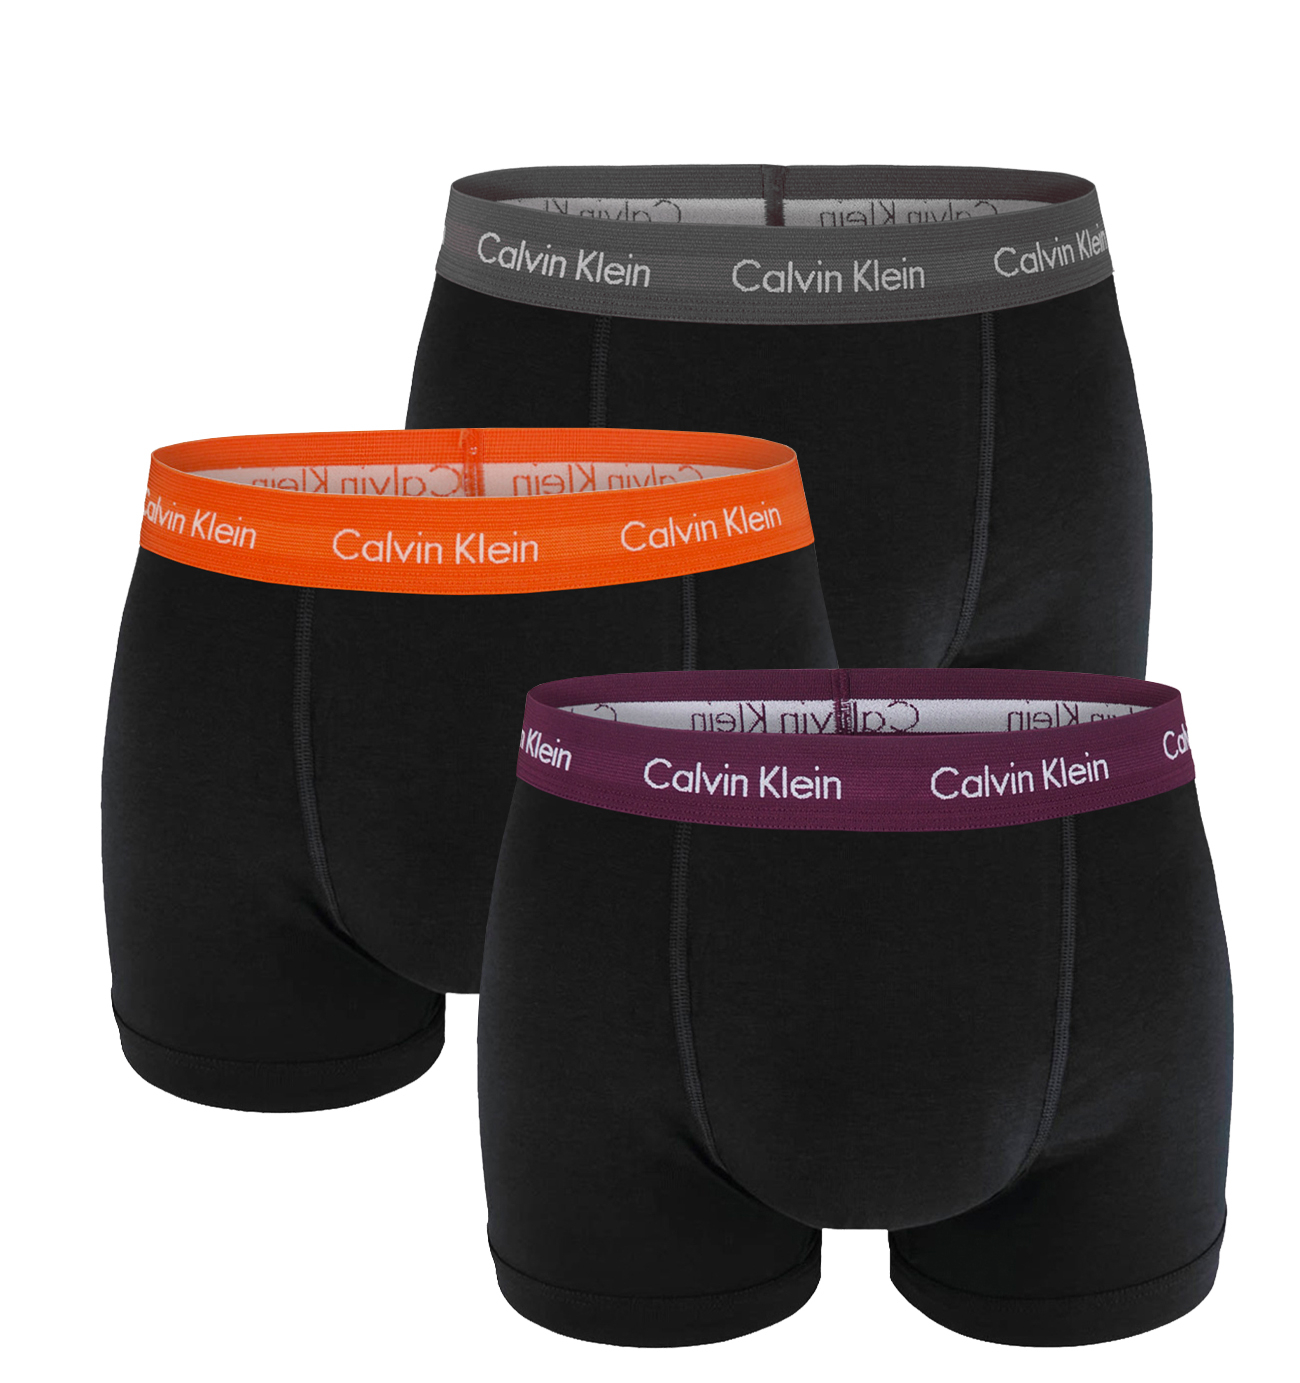 CALVIN KLEIN - boxerky 3PACK cotton stretch classic black with charcoal & orange waist - limitovaná edícia-M (81-86 cm)